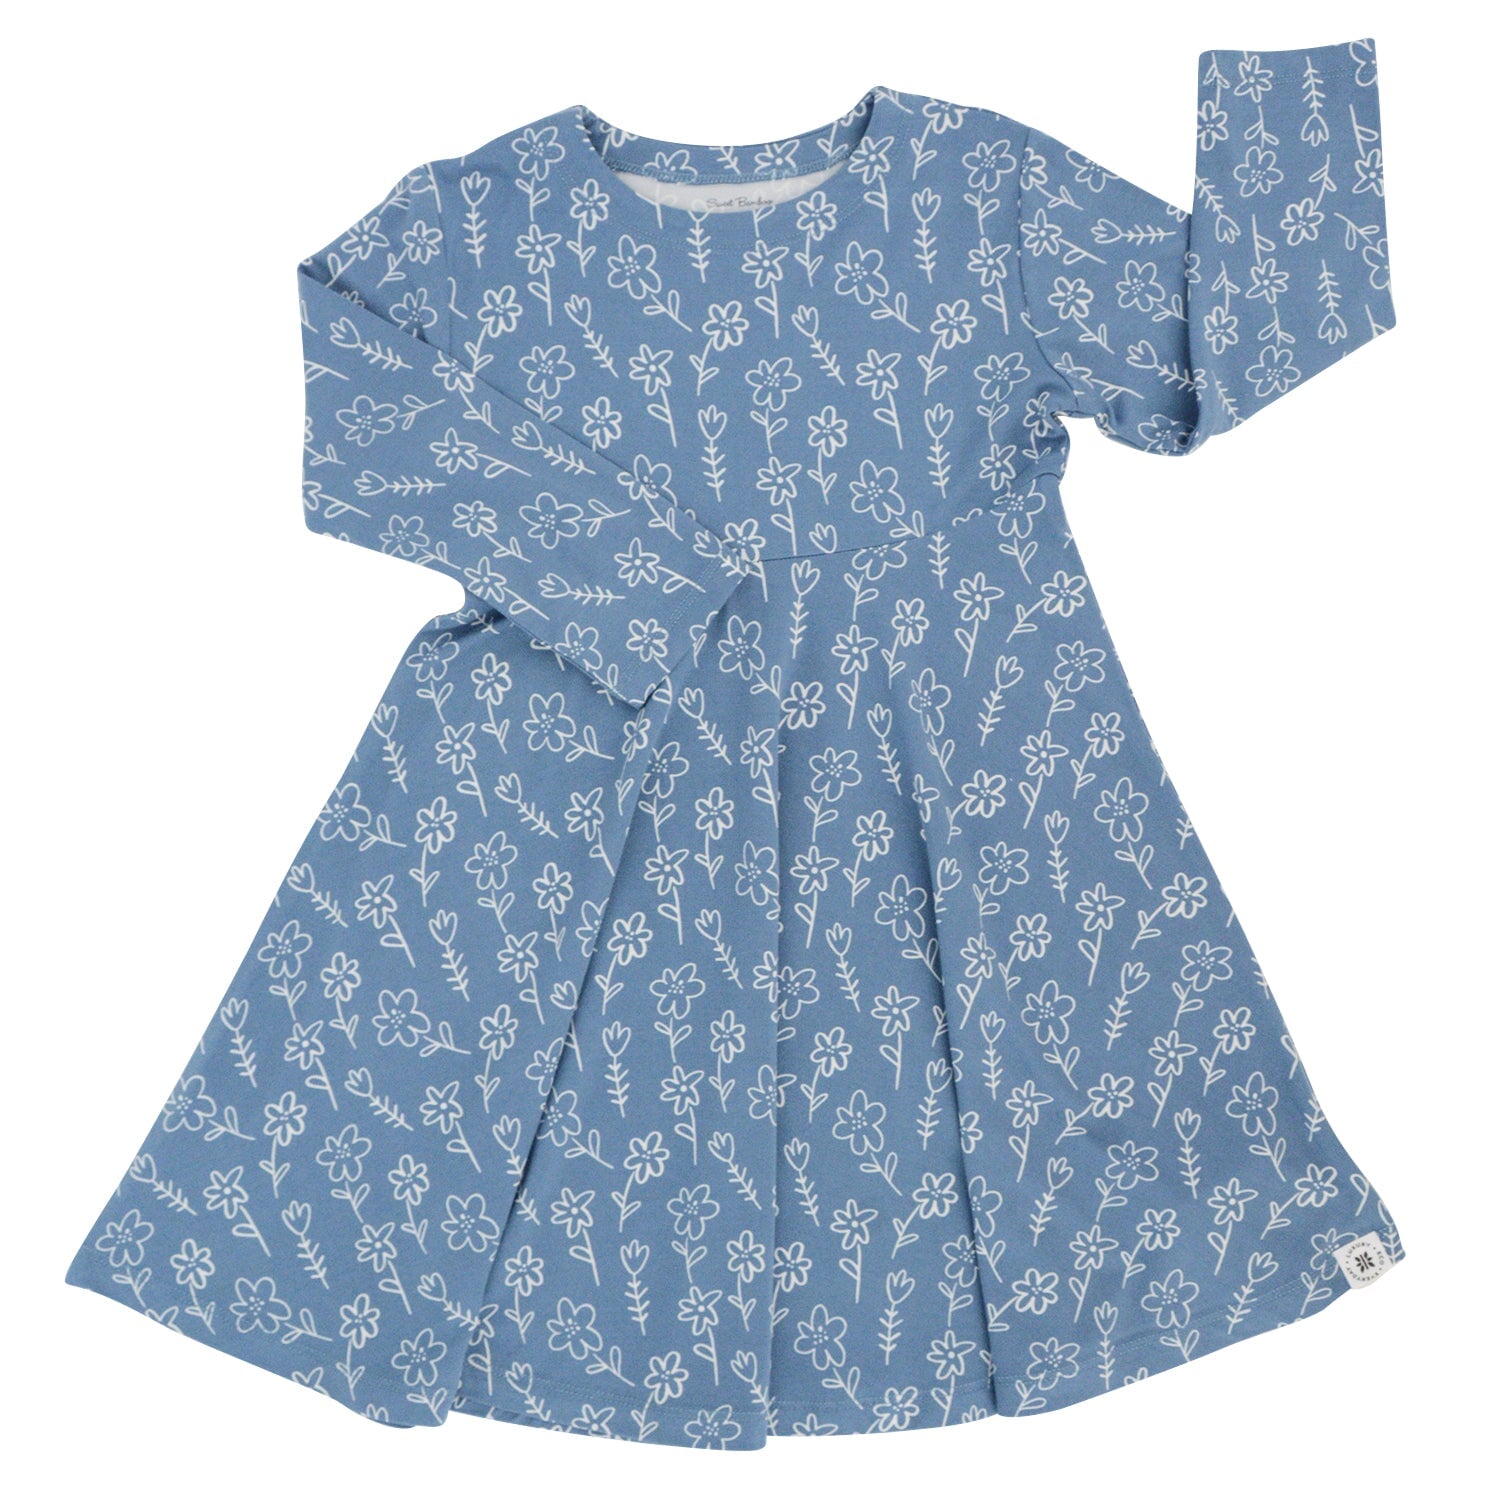 Swirly Girl Dress - Blue Doodle